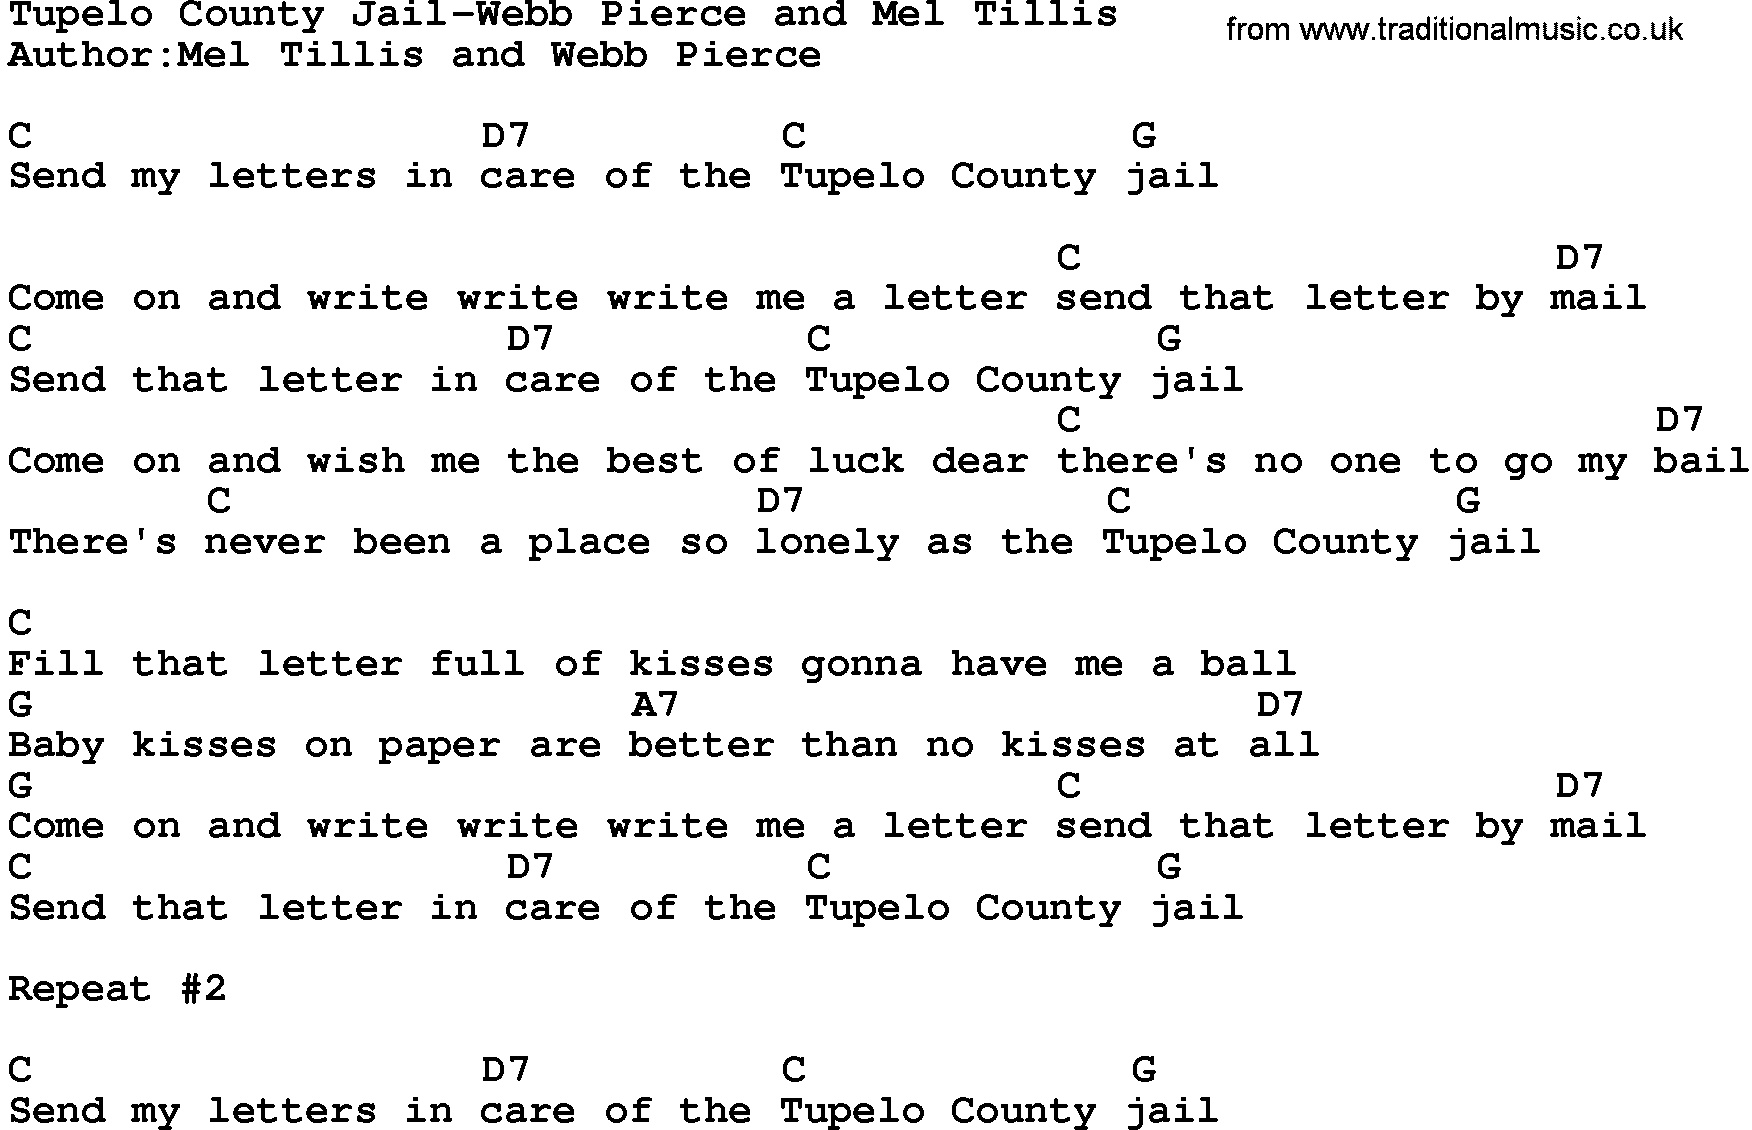 Country music song: Tupelo County Jail-Webb Pierce And Mel Tillis lyrics and chords